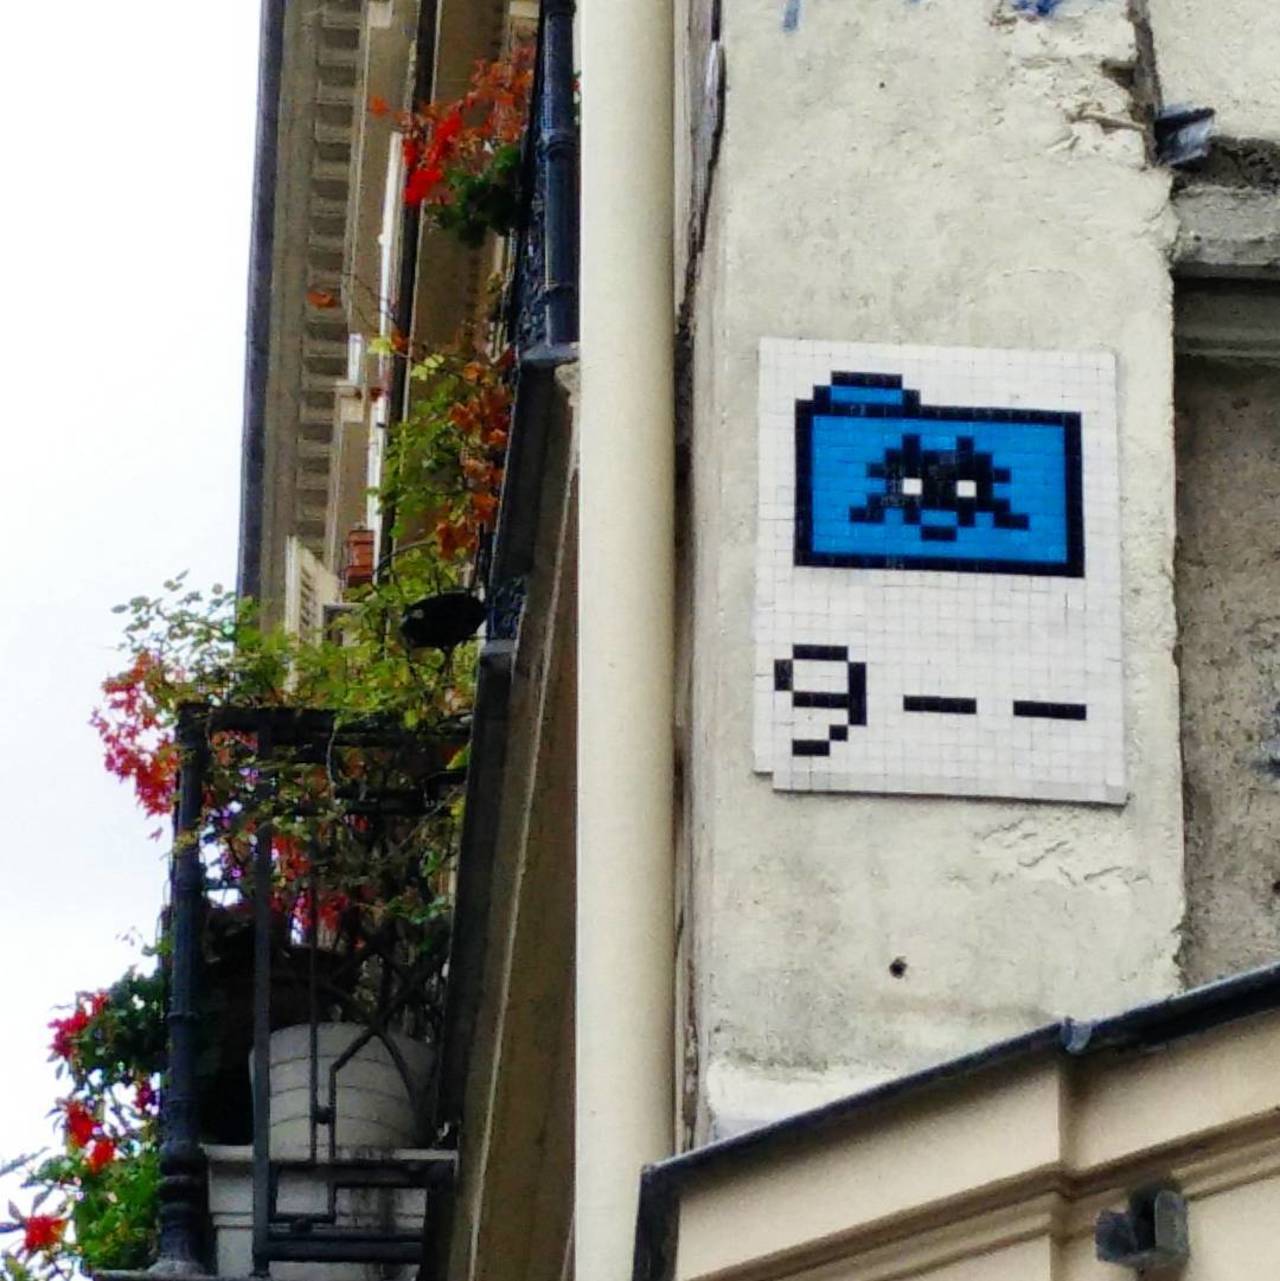 #Paris #graffiti photo by ceky_art http://ift.tt/1LXMuFT #StreetArt https://t.co/zCPg6MTump https://goo.gl/t4fpx2